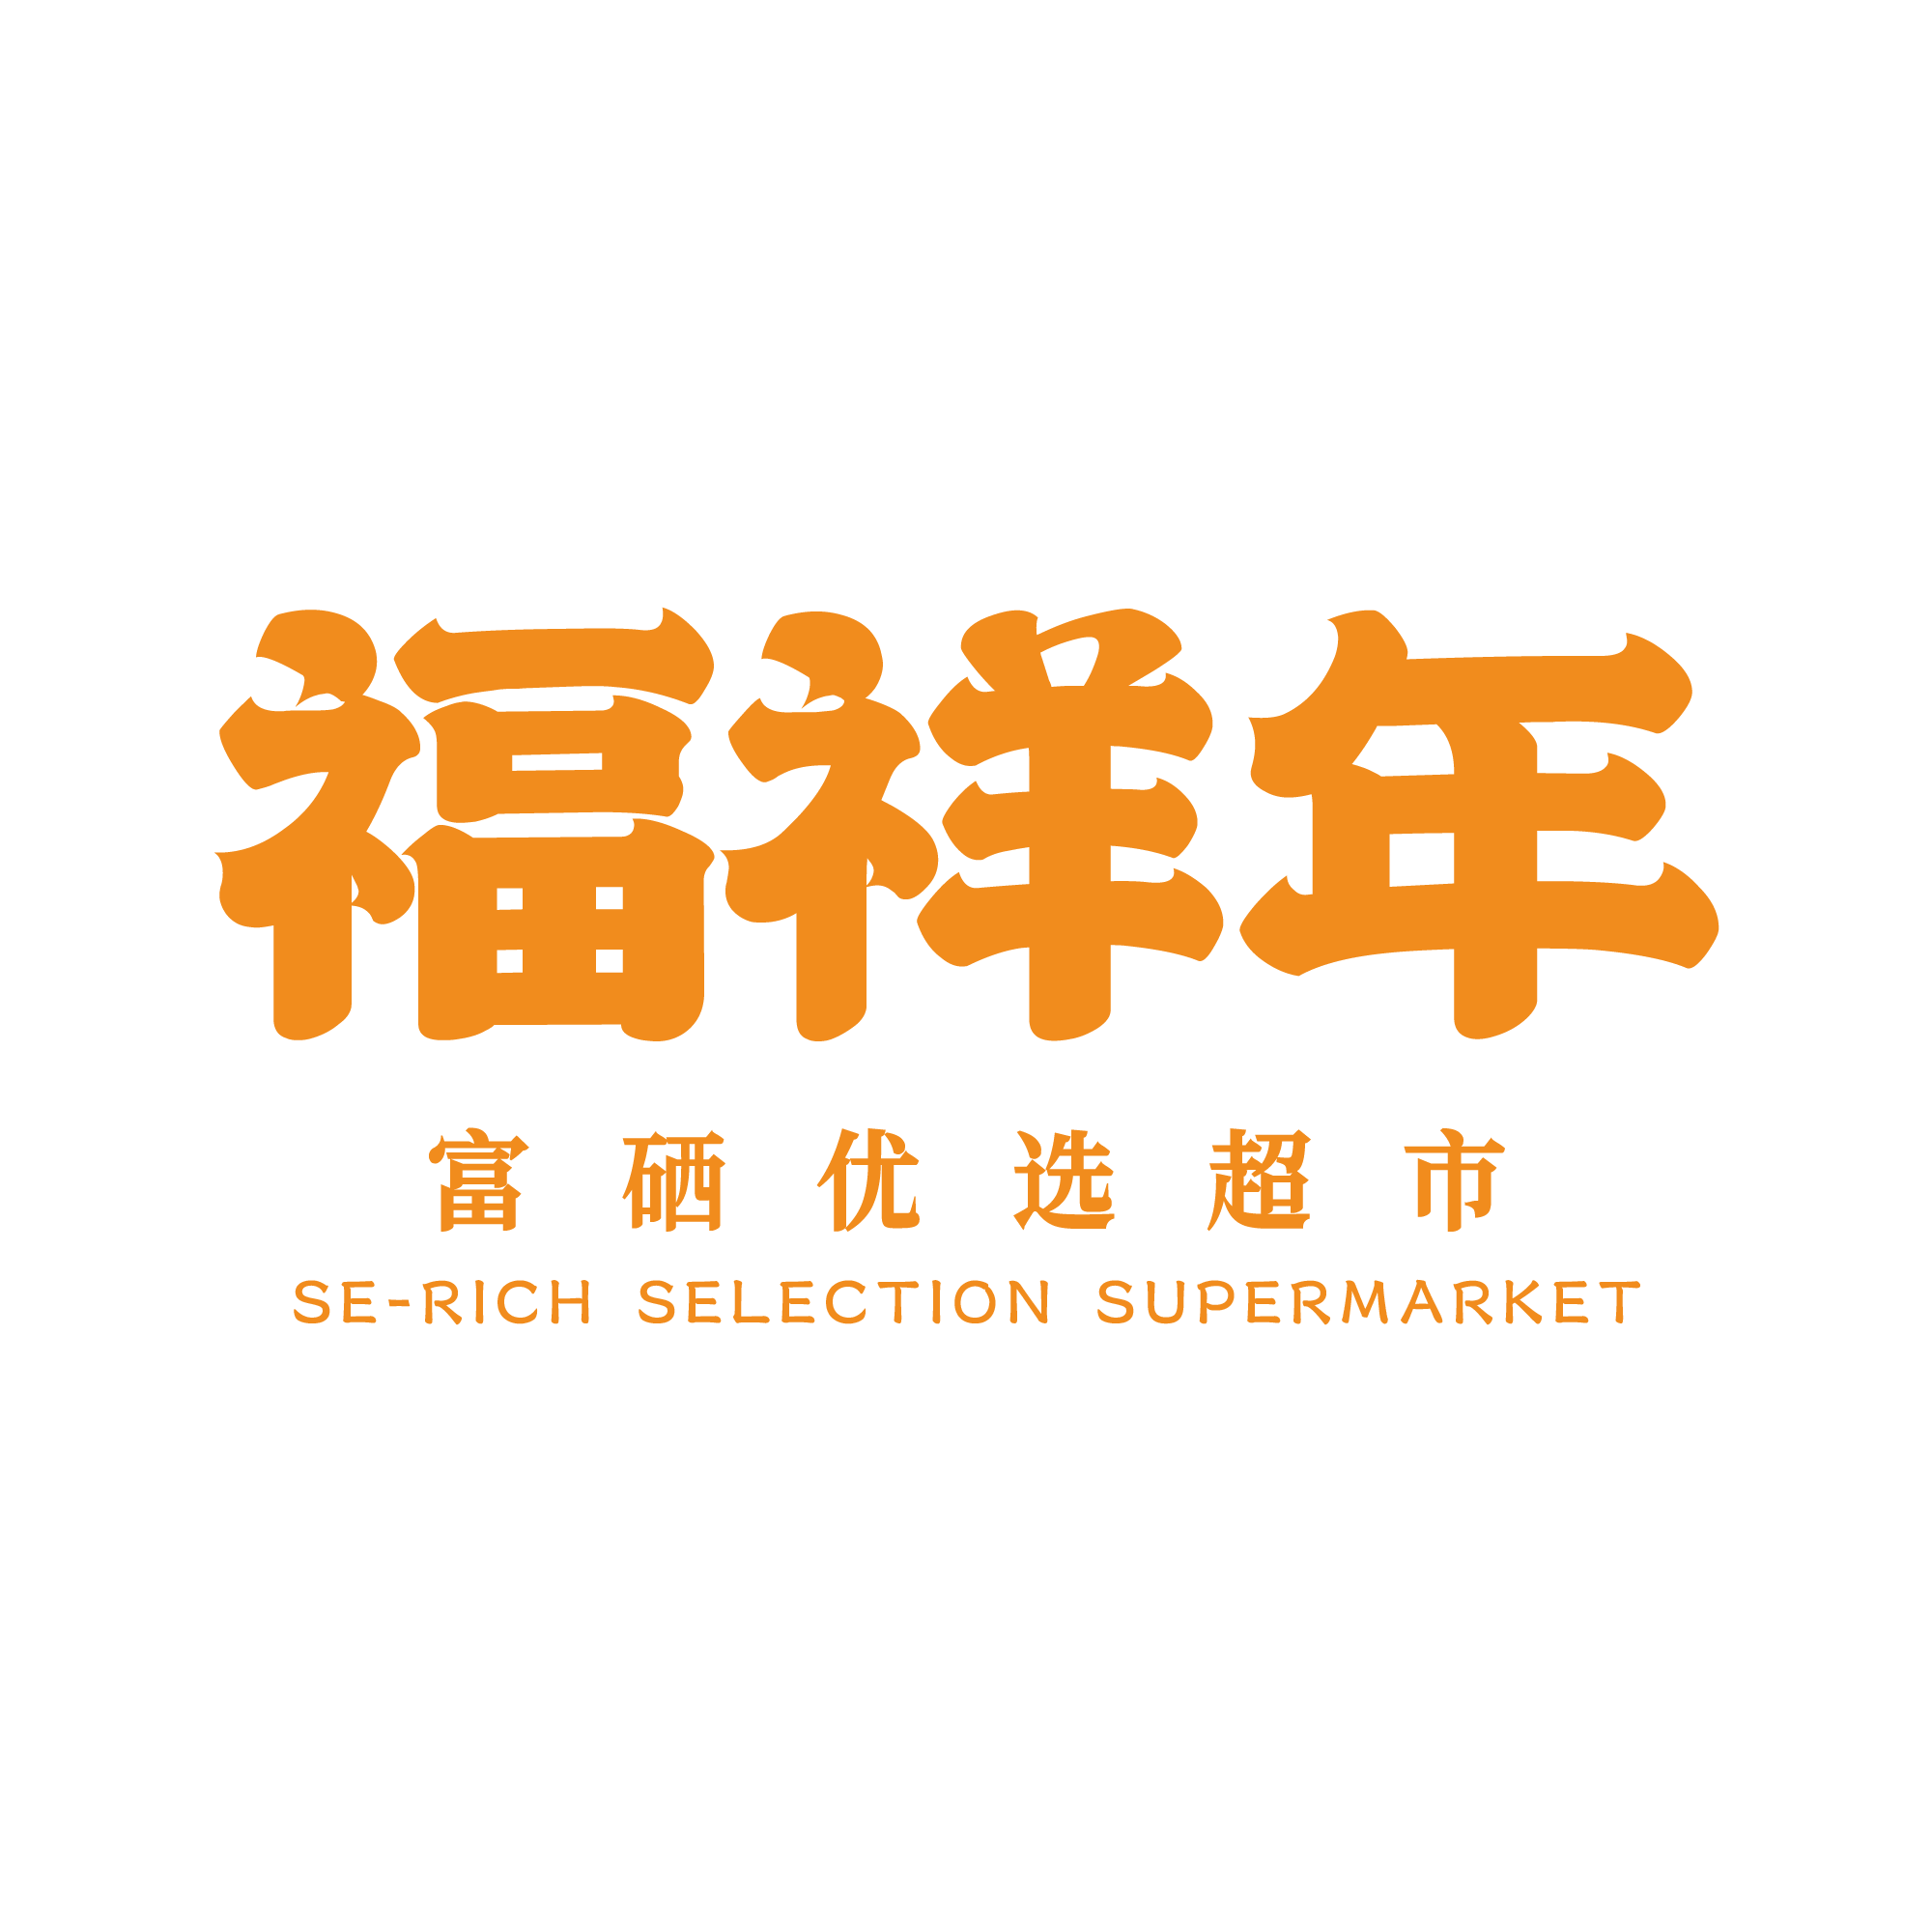 新版logo超市 橙色-png.png